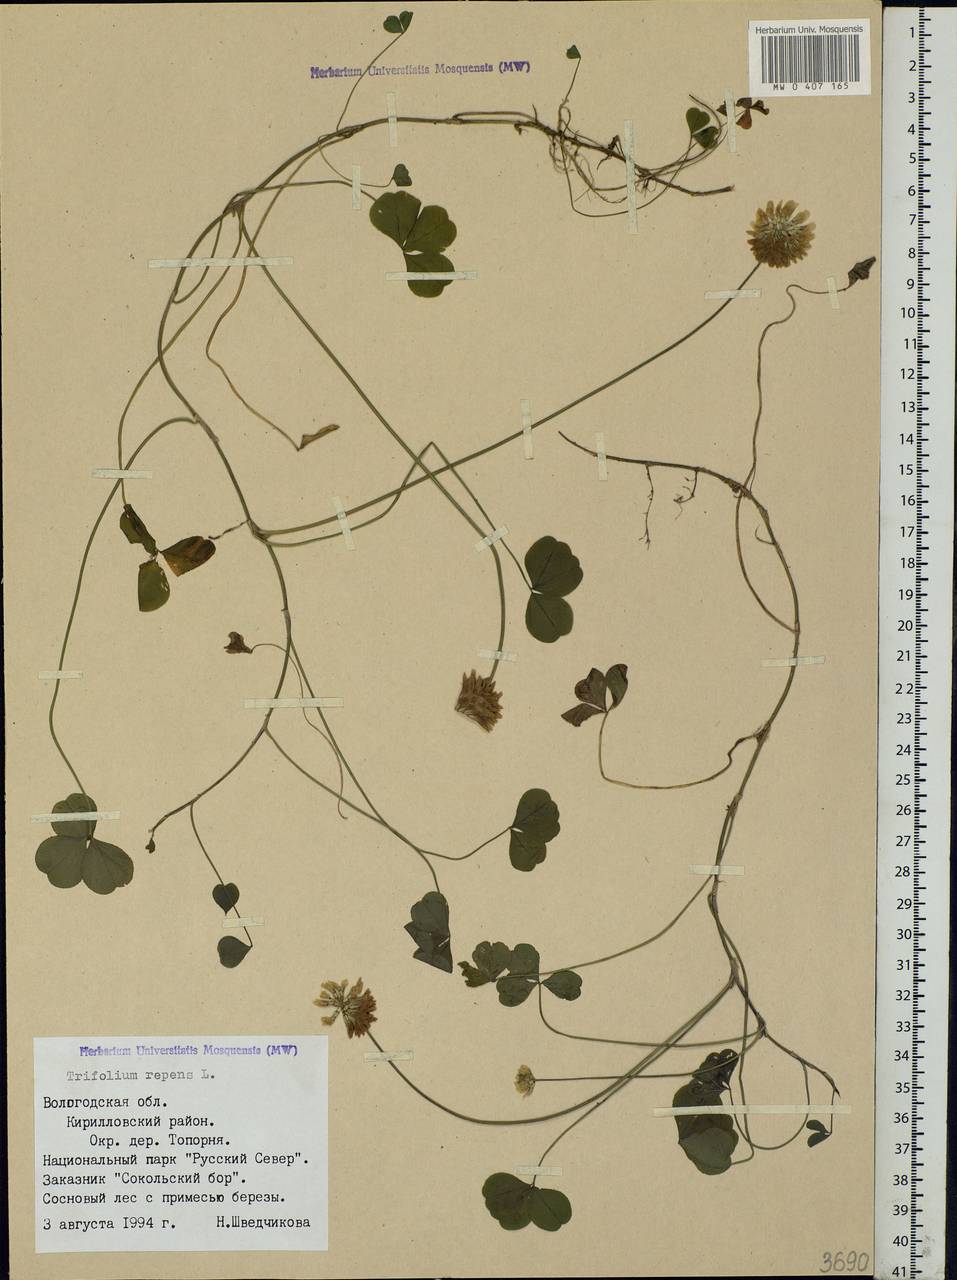 Trifolium repens L., Eastern Europe, Northern region (E1) (Russia)